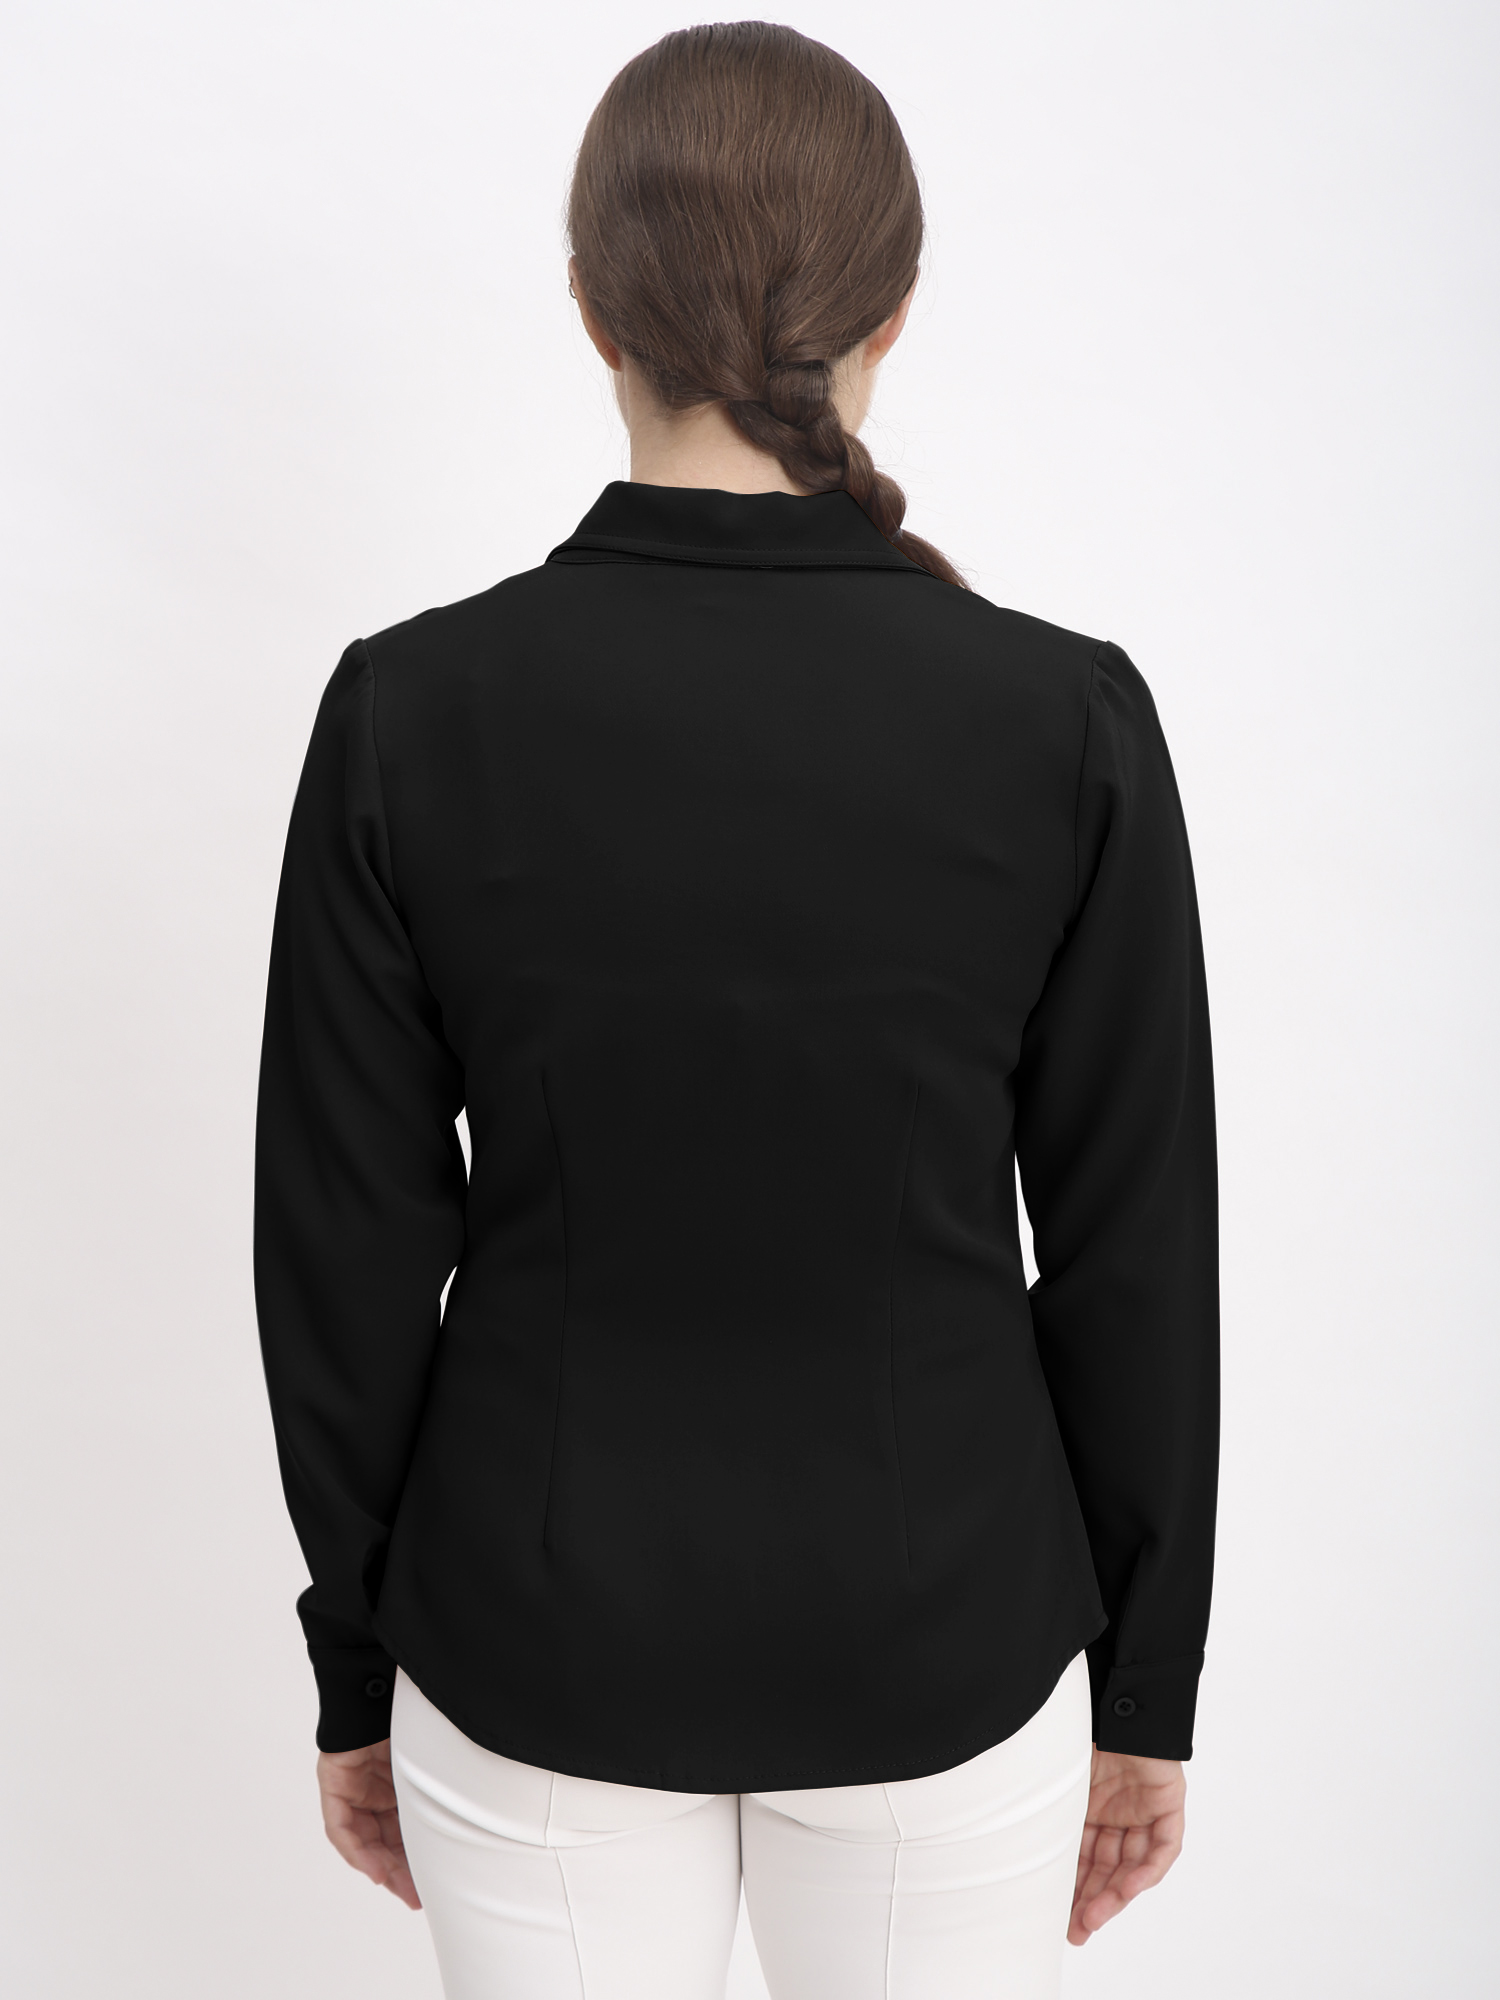 Basic Office Shirt Black - Back